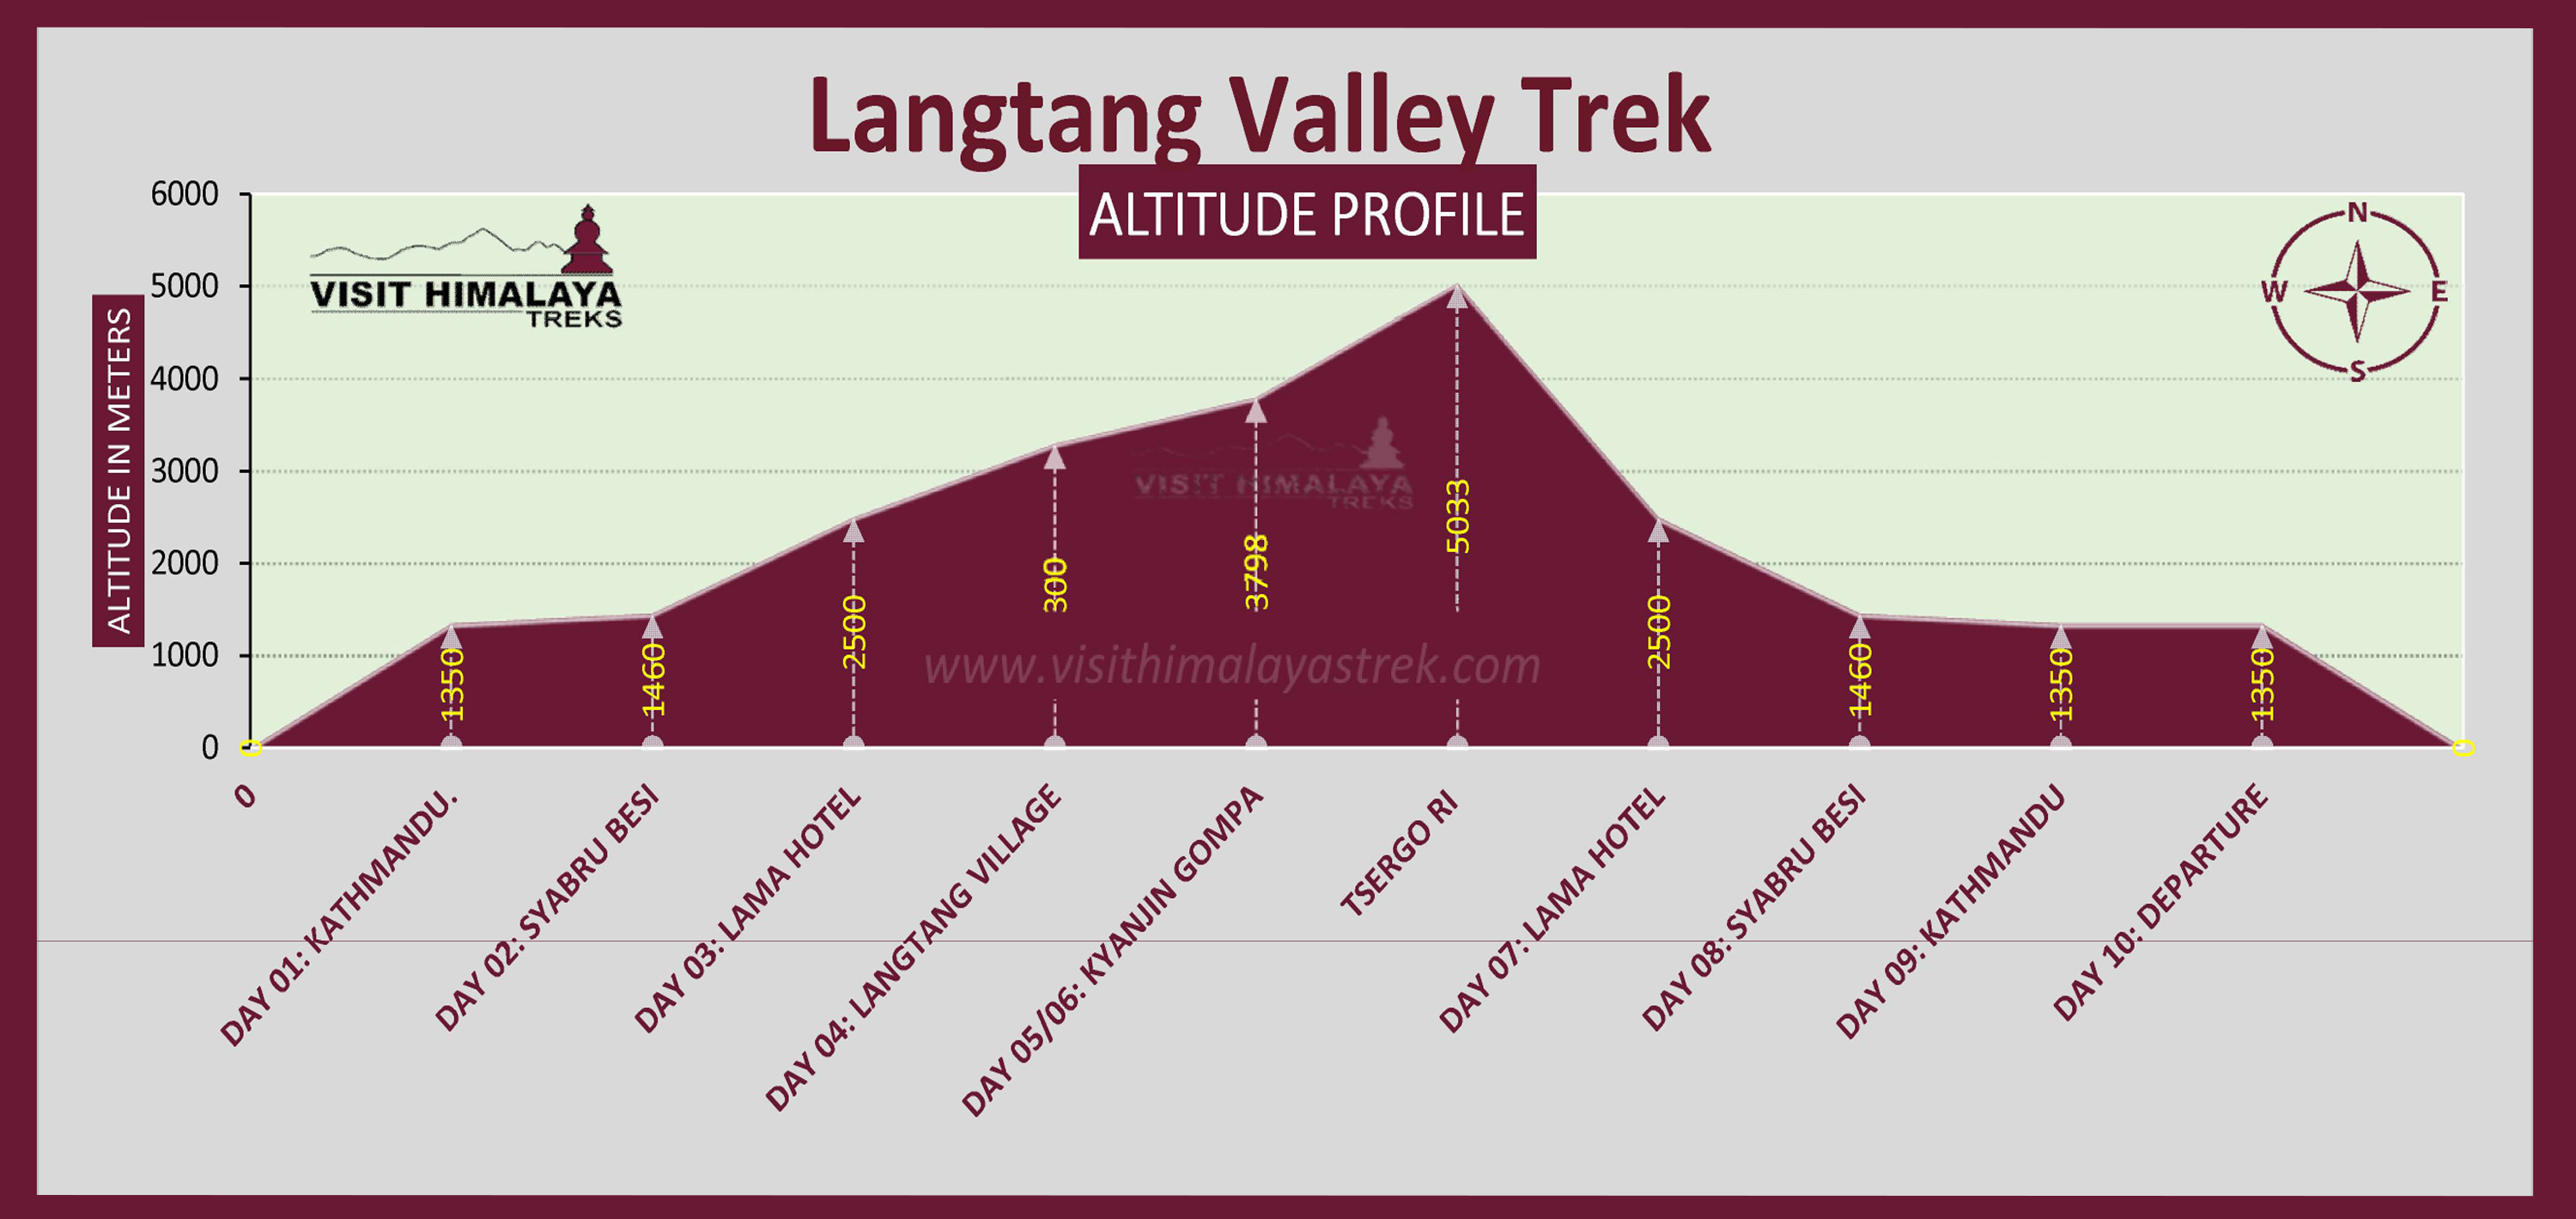 Langtang Valley Treks Altitude Profile.